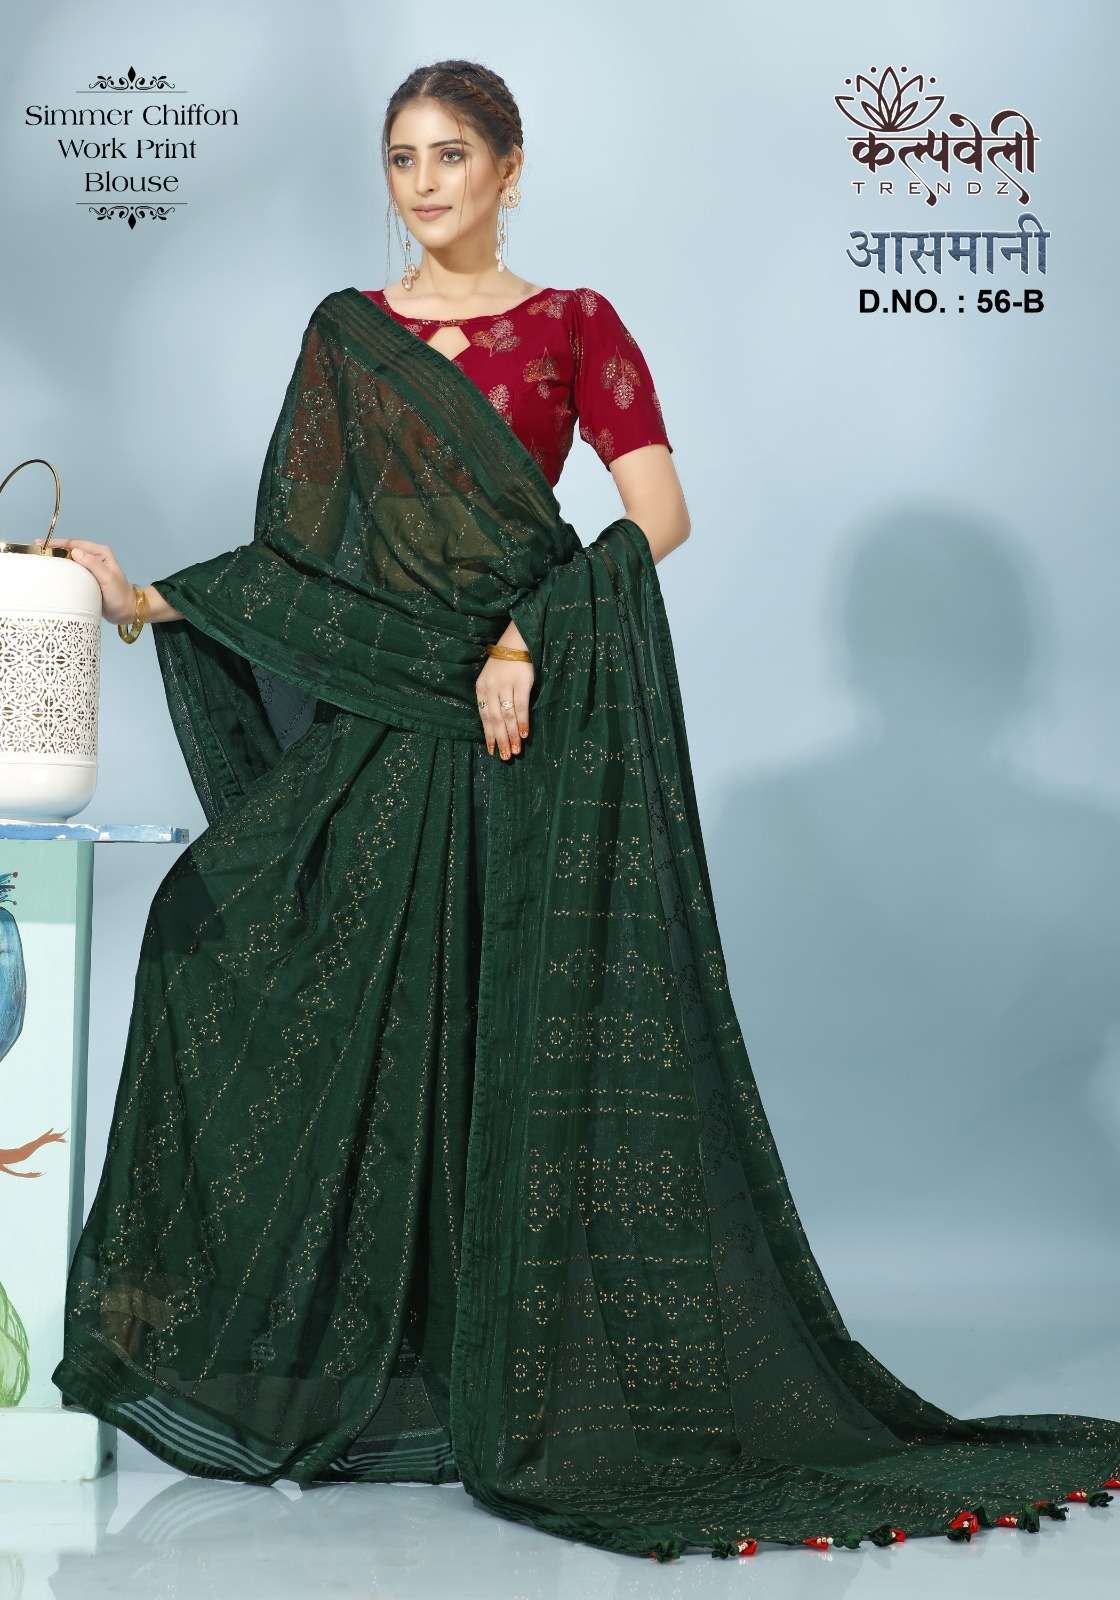 kalpavelly trendz ashmani 56 shimmer chiffon fancy sarees collection